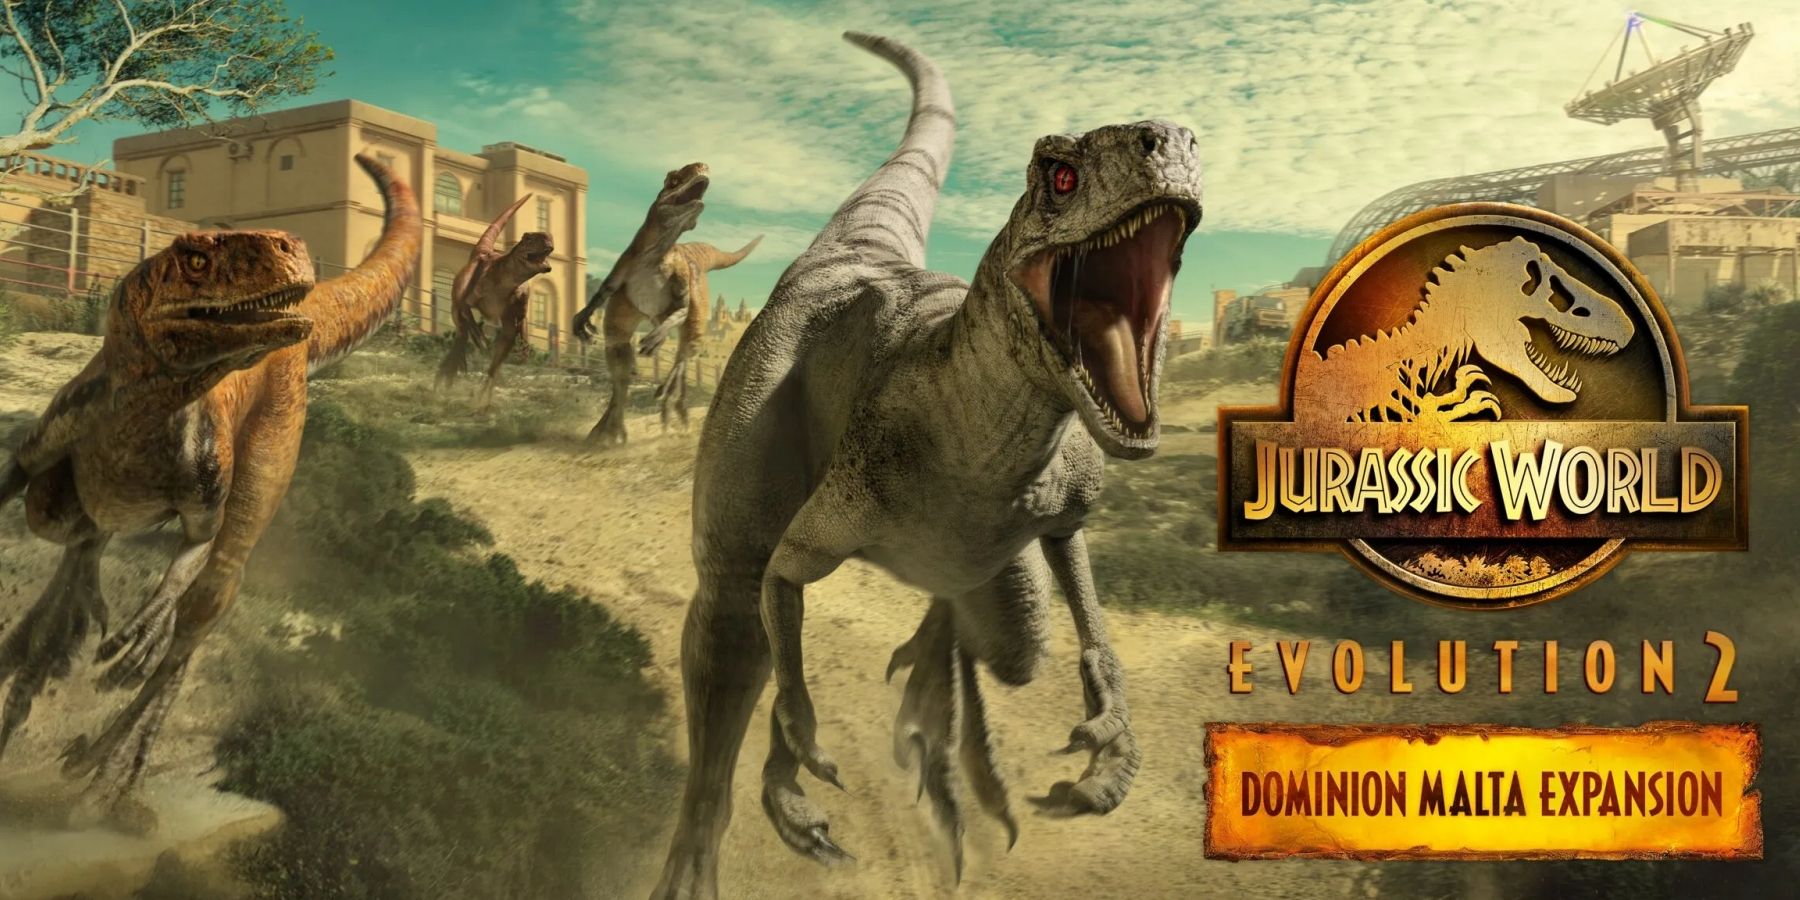 Jurassic World Evolution 2: Dominion Malta Expansion Announced